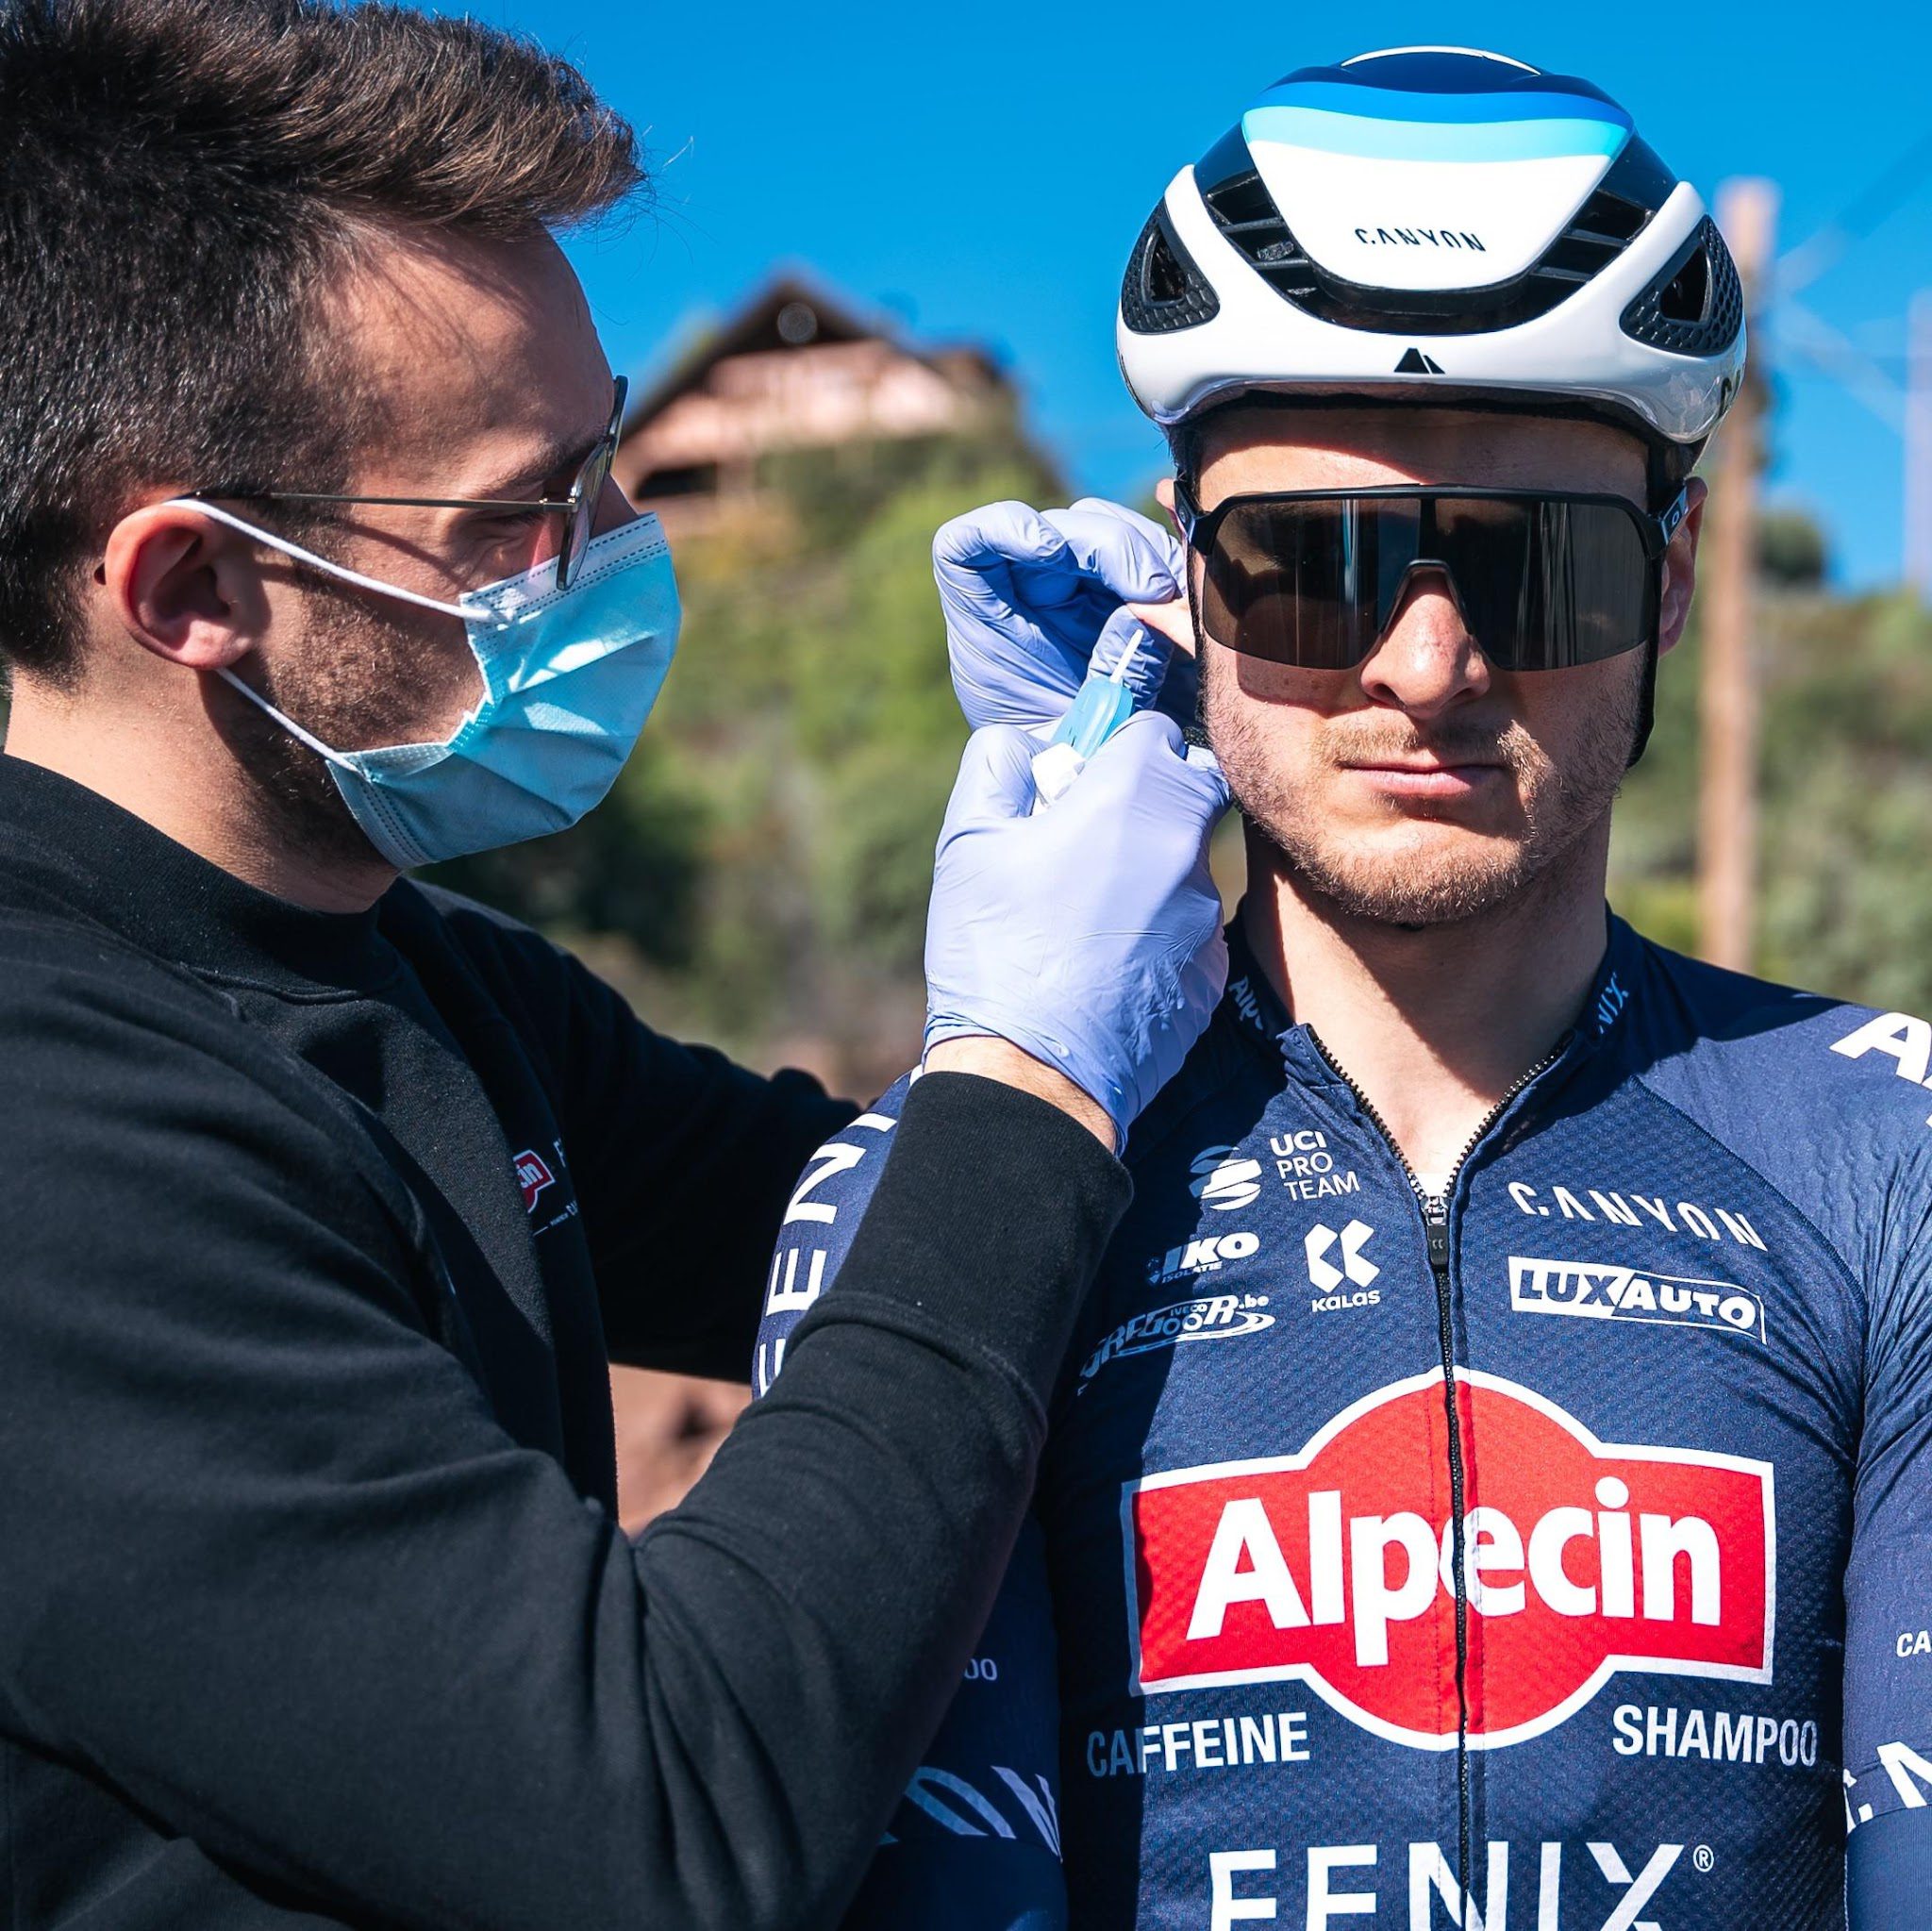 Alpecin-Fenix Cycling Team USE PERFORMANCE TESTING